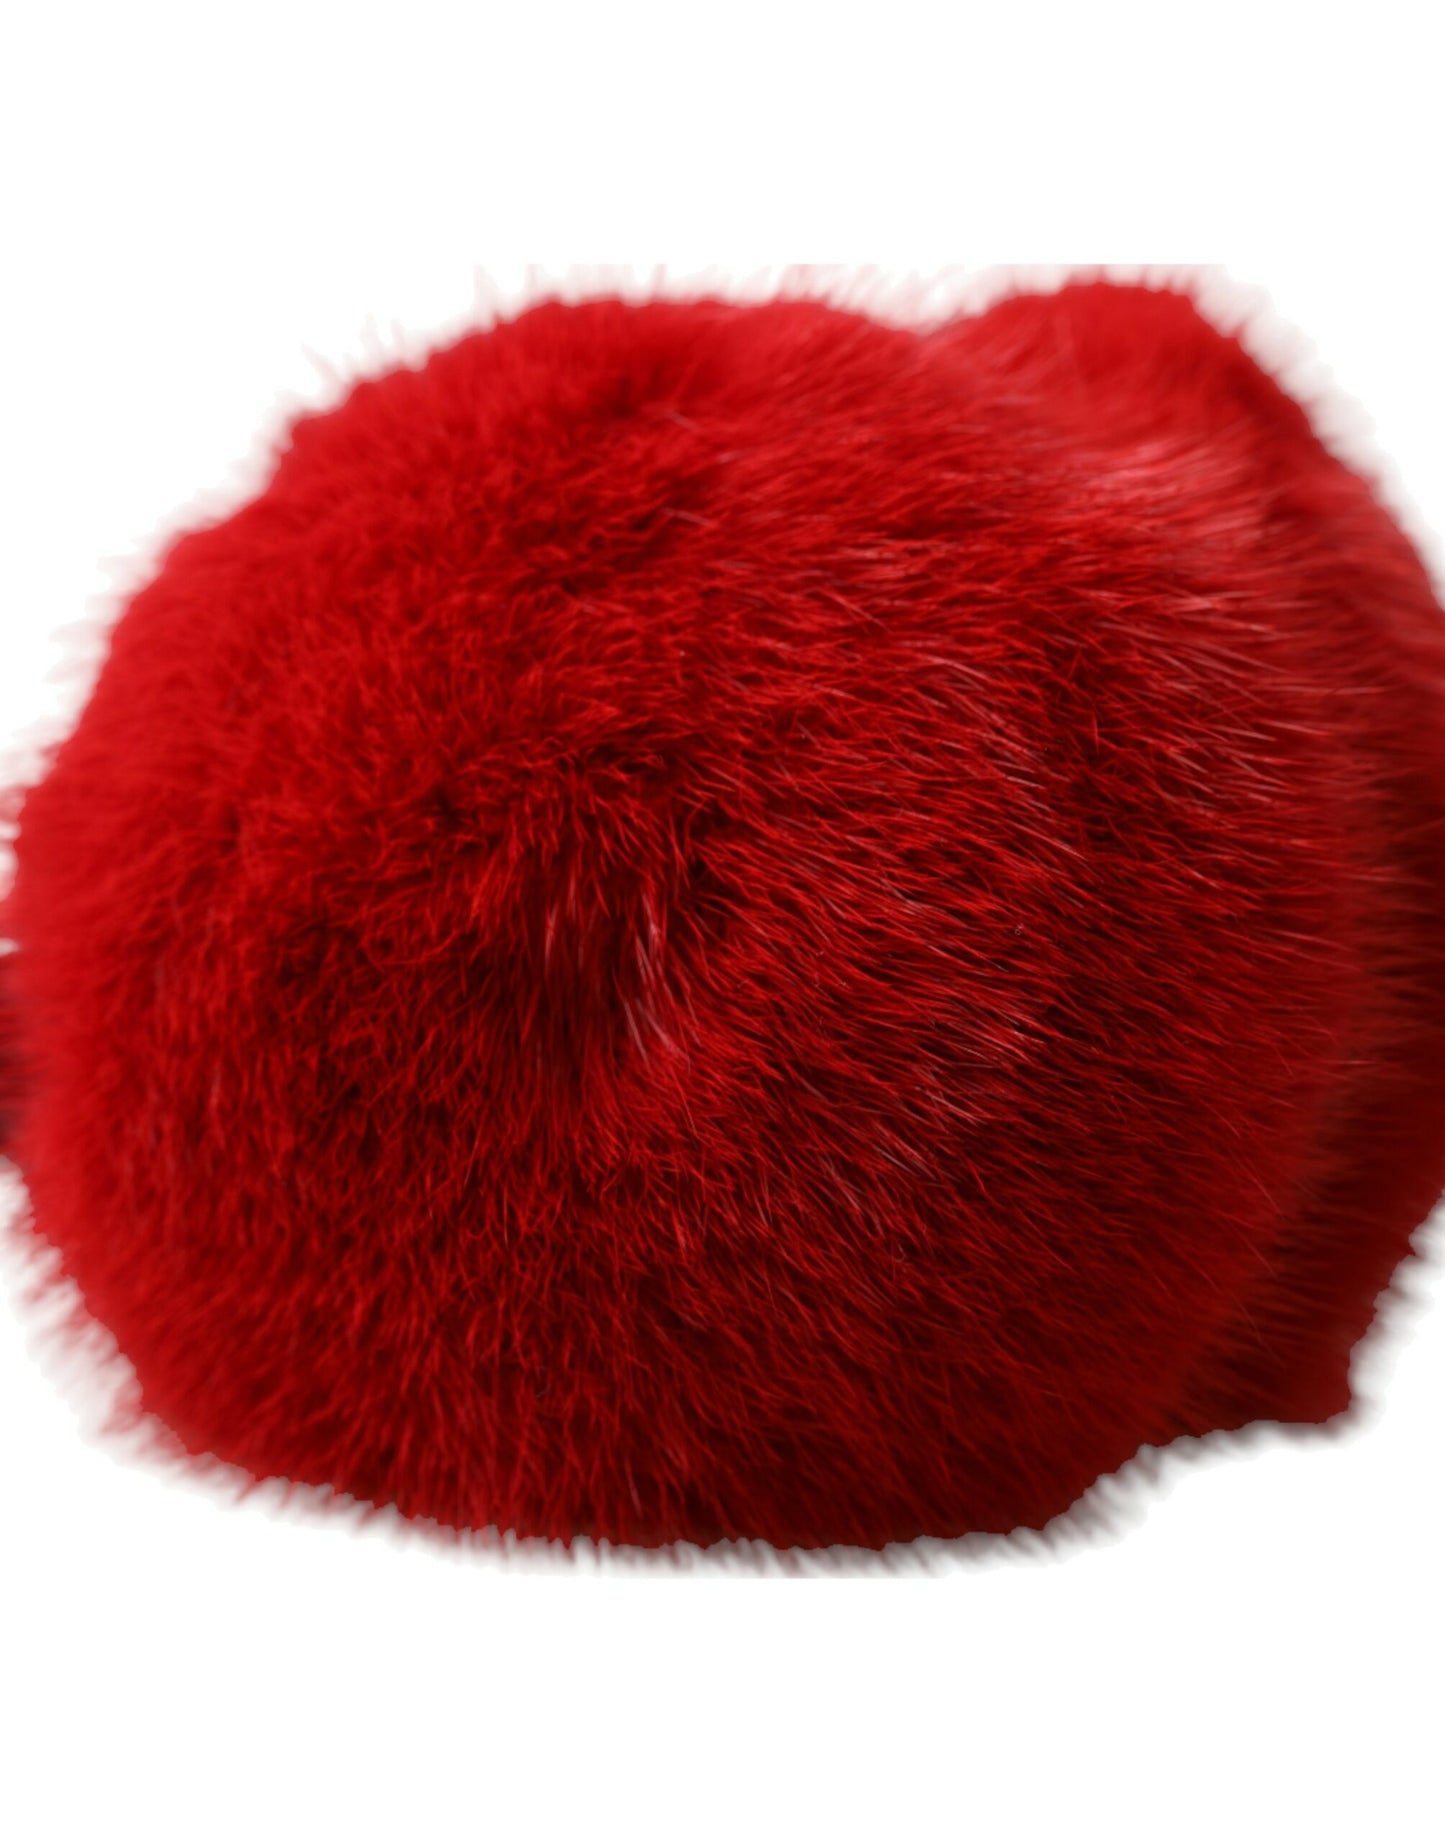 Dolce & Gabbana Women's Red Mink Fur Winter Warmer Headband Ear Muffs